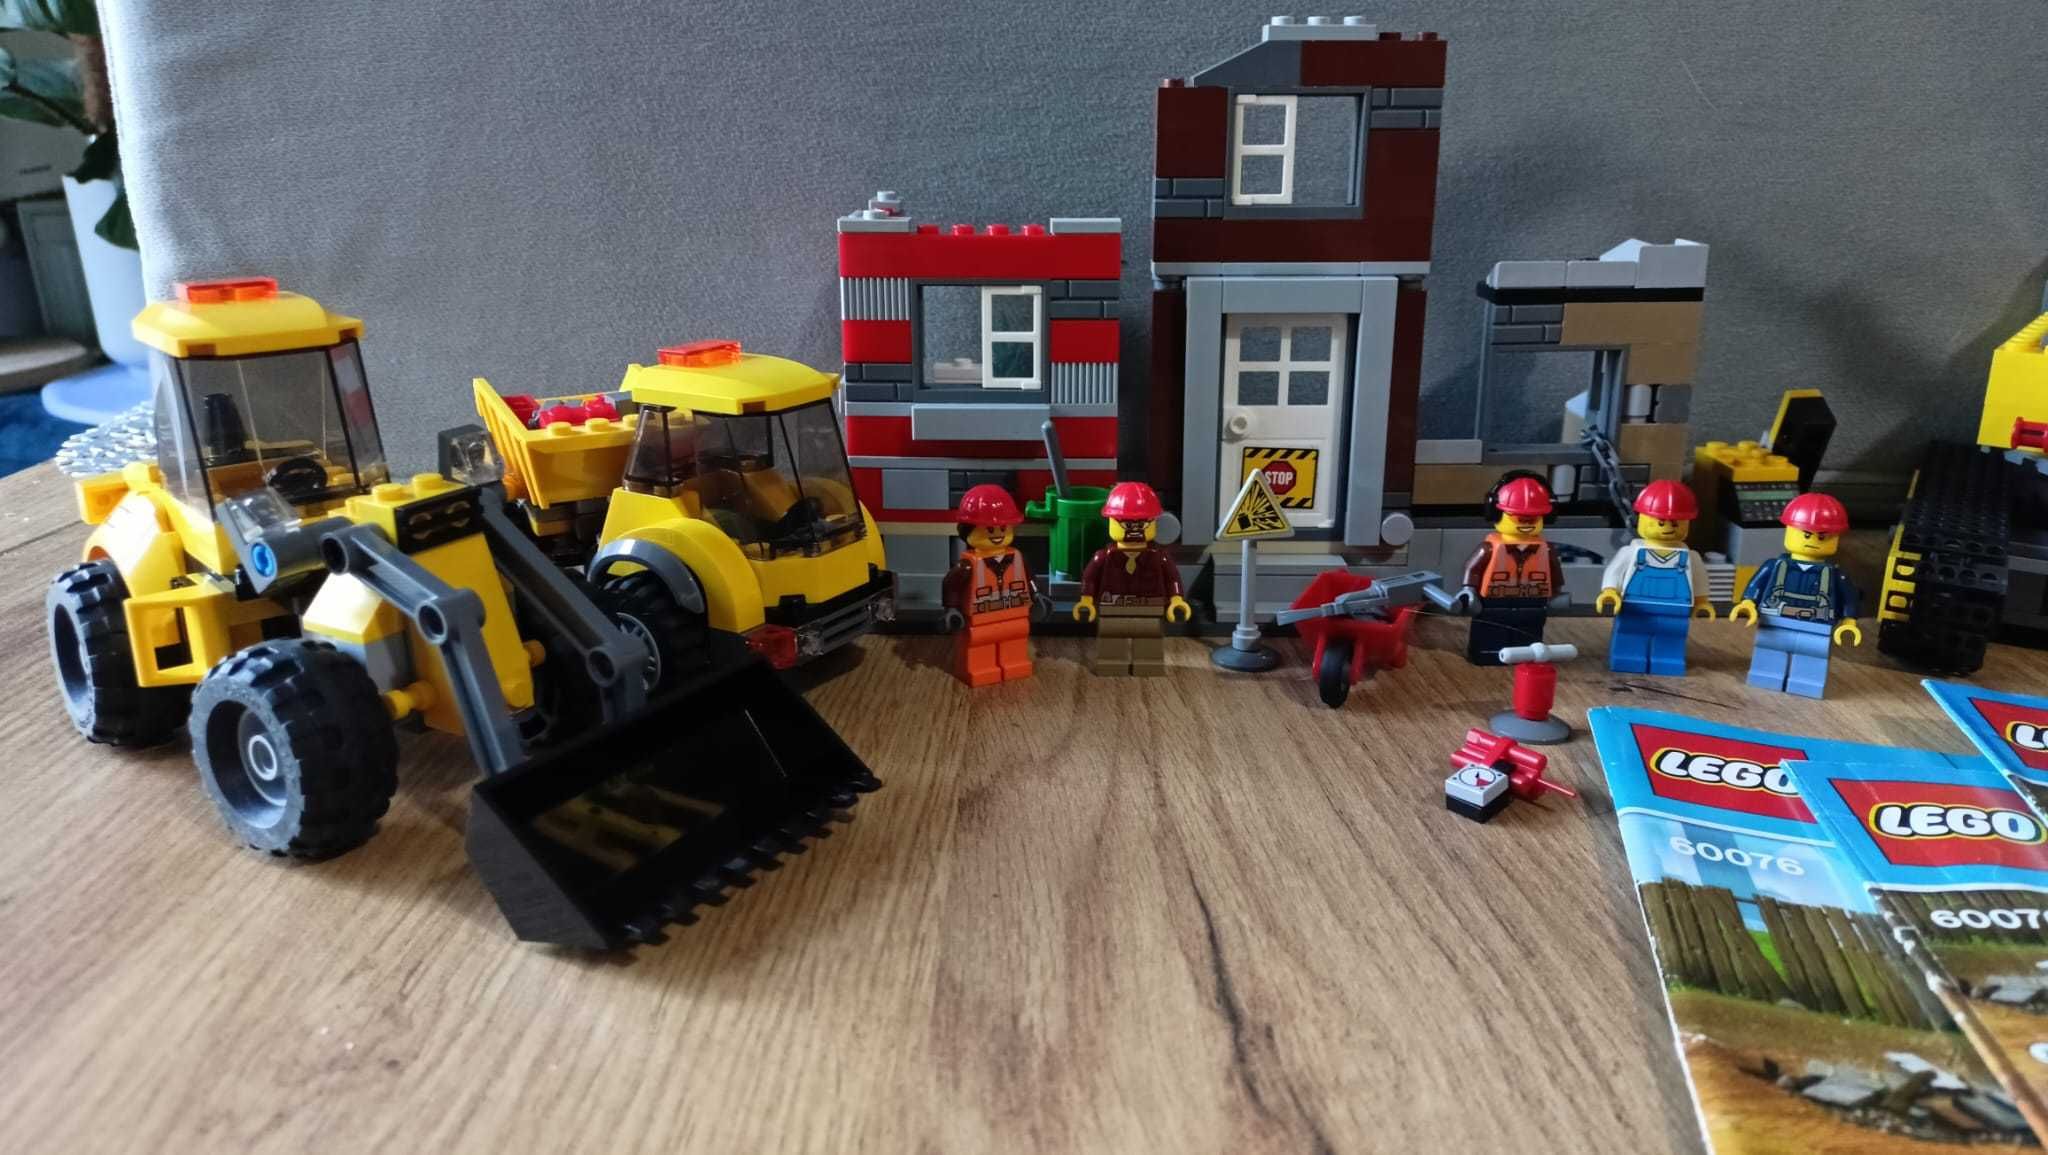 LEGO city 60076 rozbiórka